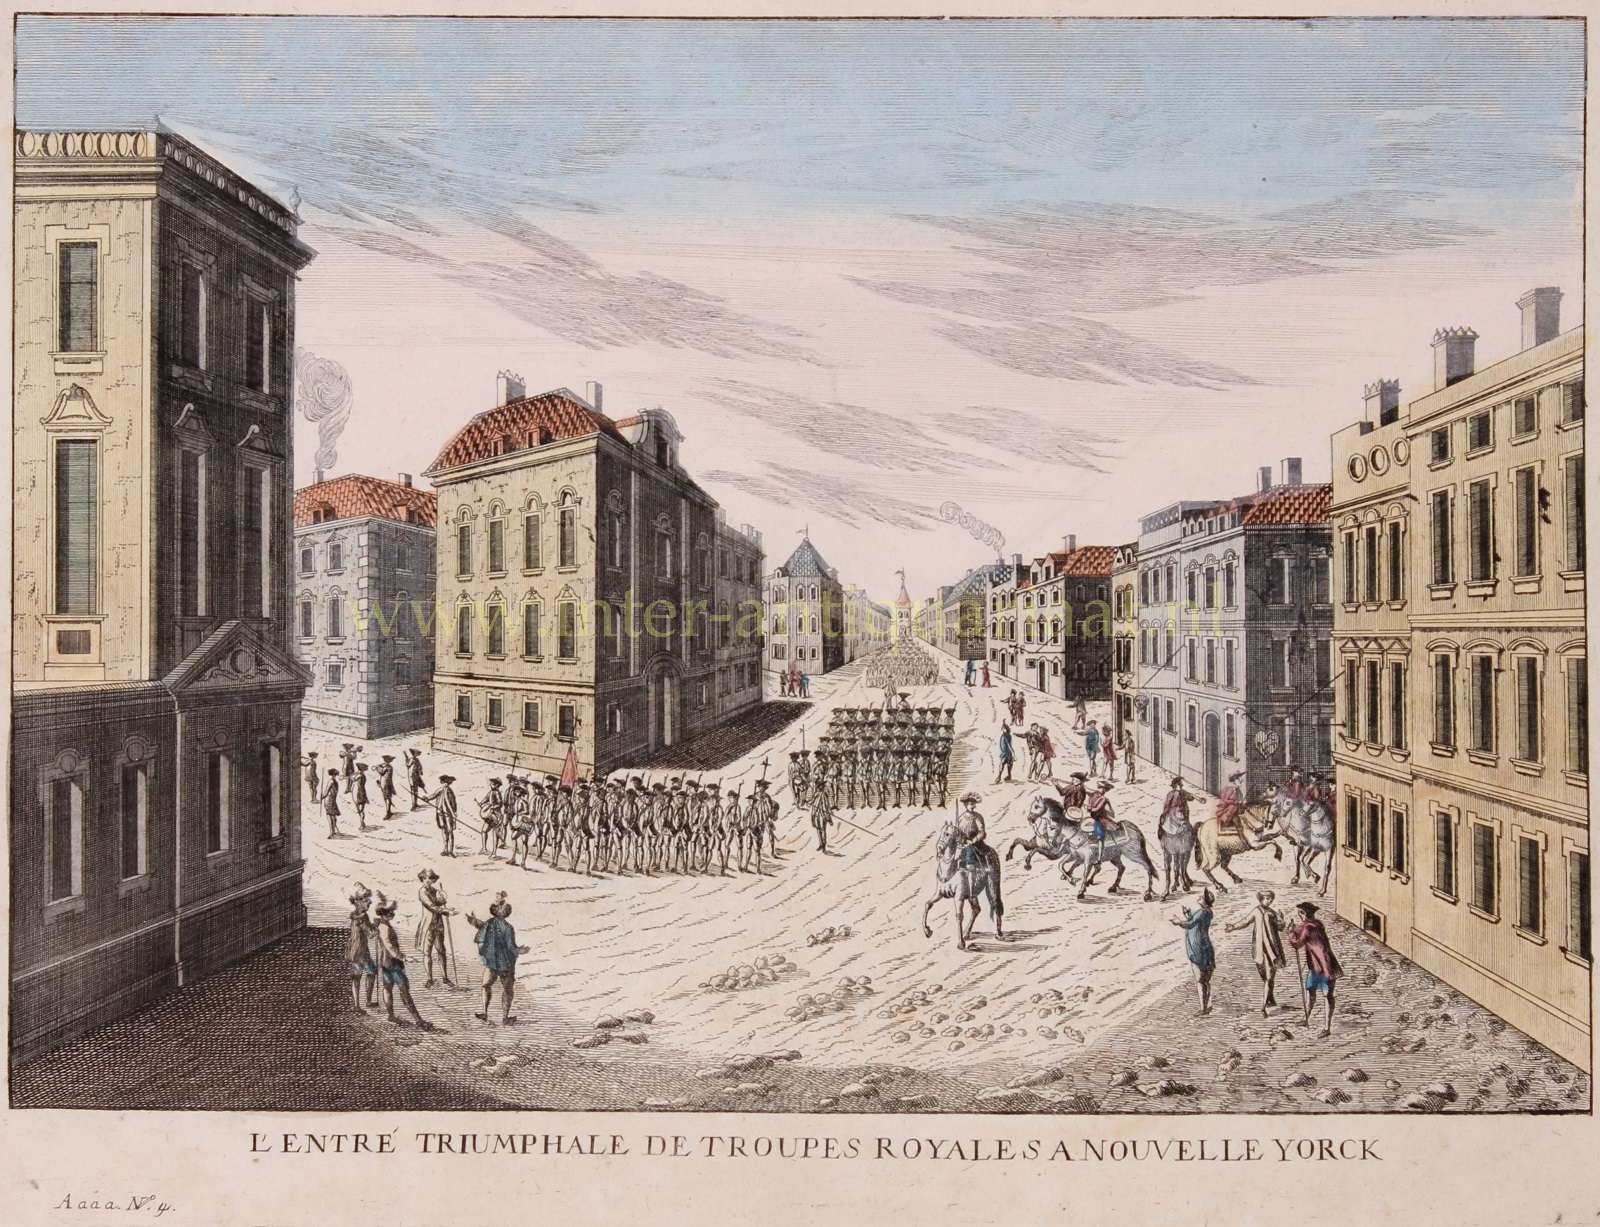  - New York, British troops entering the city - after Franz Xavier Habermann, c. 1776